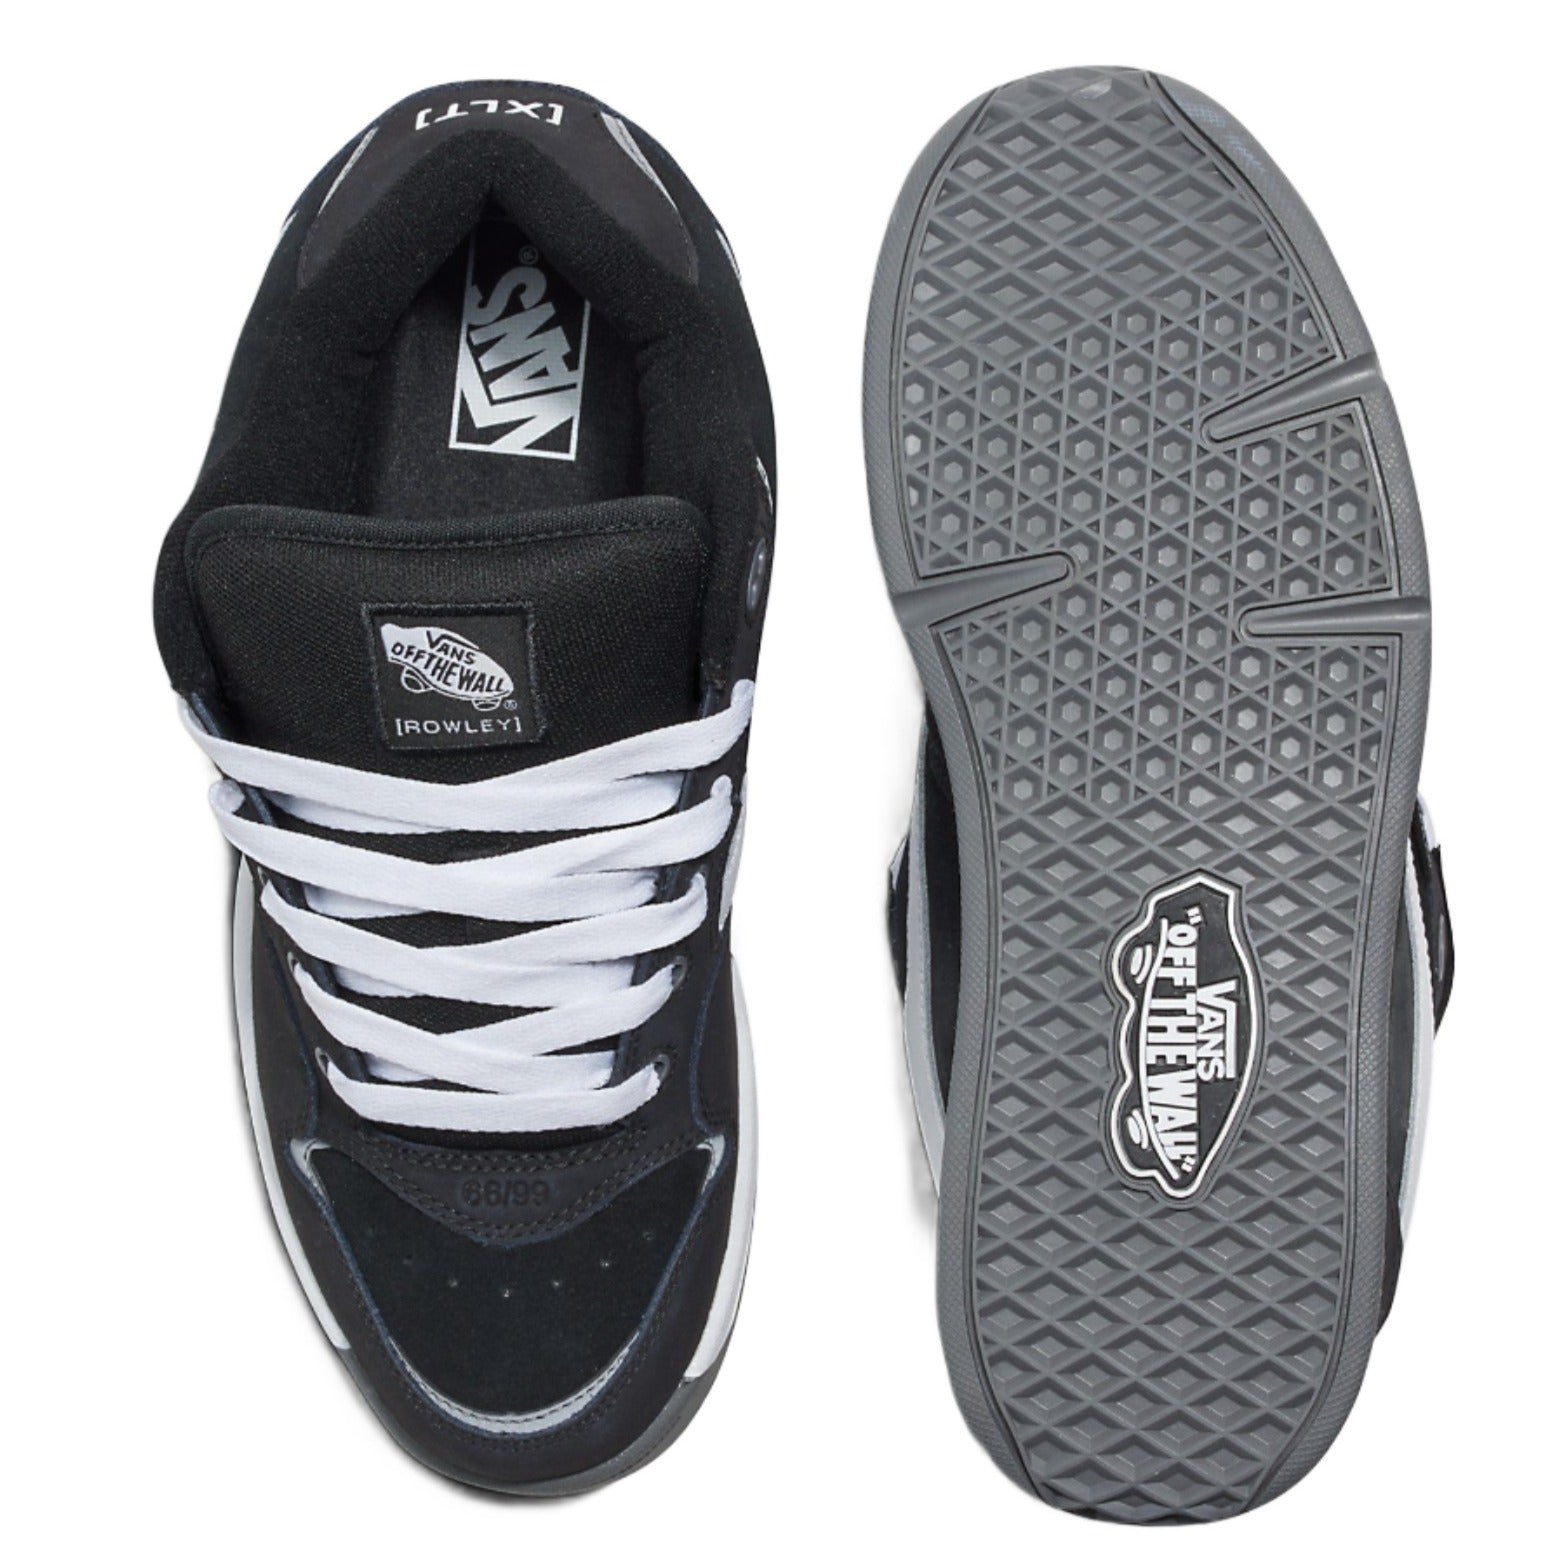 Black/White Rowley XLT Vans Shoe Top/Bottom